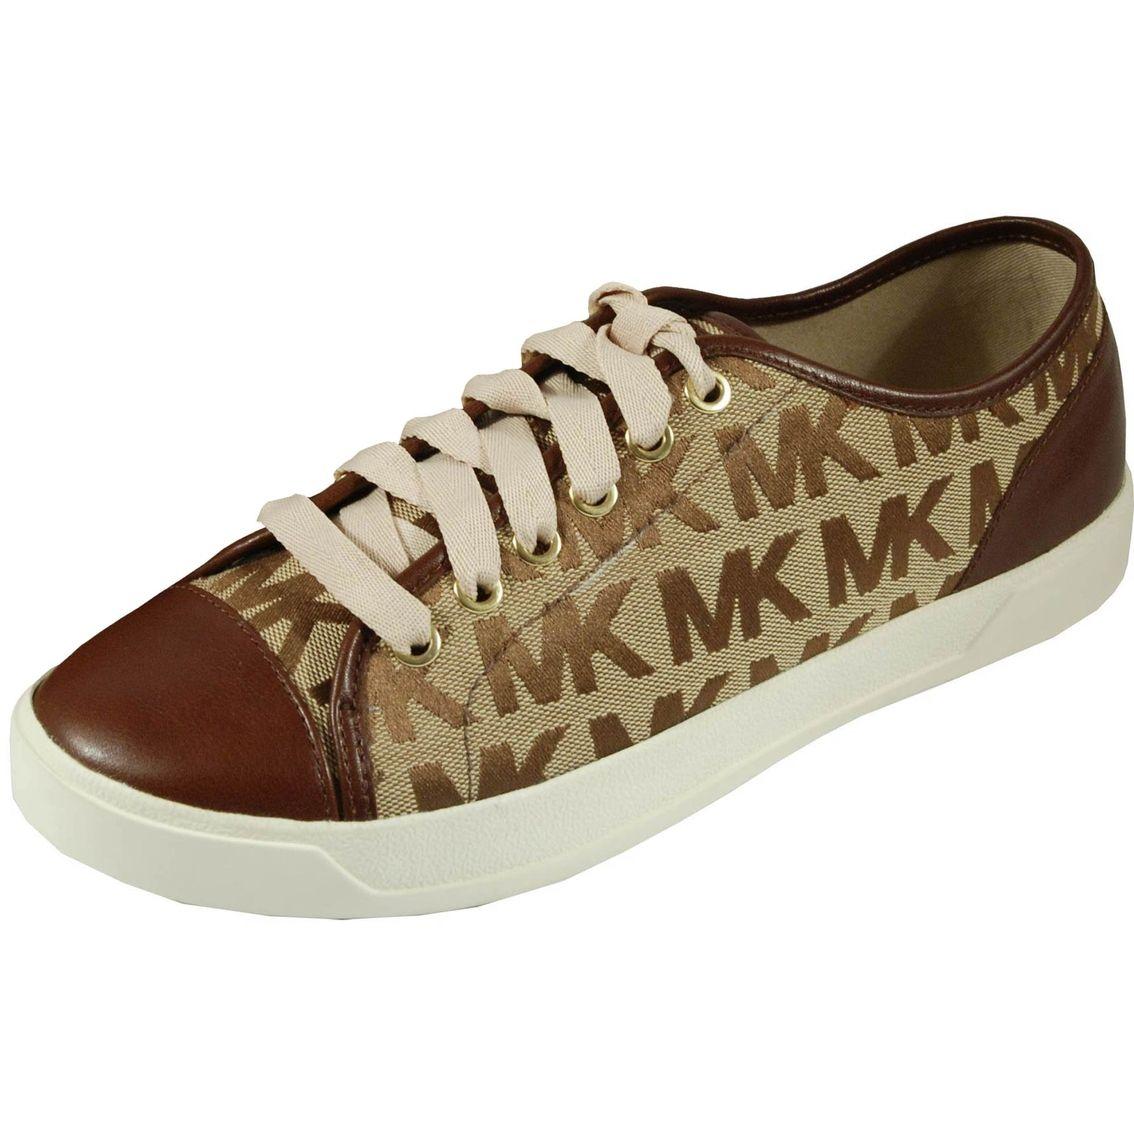 Michael Kors Shoe Logo - Michael Kors Women's Mk City Sneakers | Shoes | Shop The Exchange